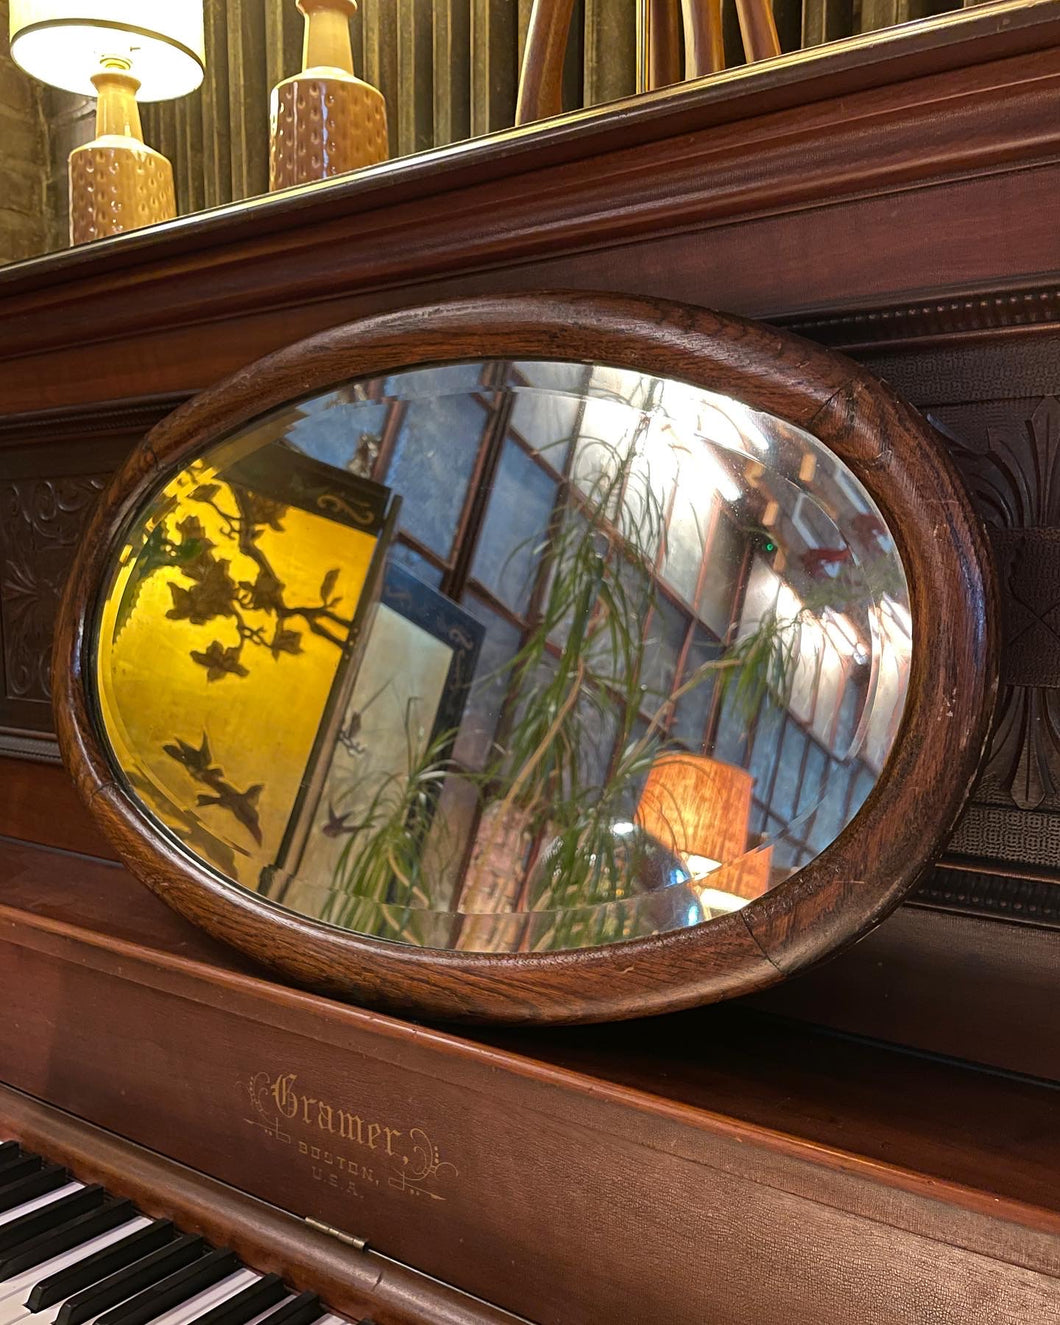 Antique Beveled Oval Mirror